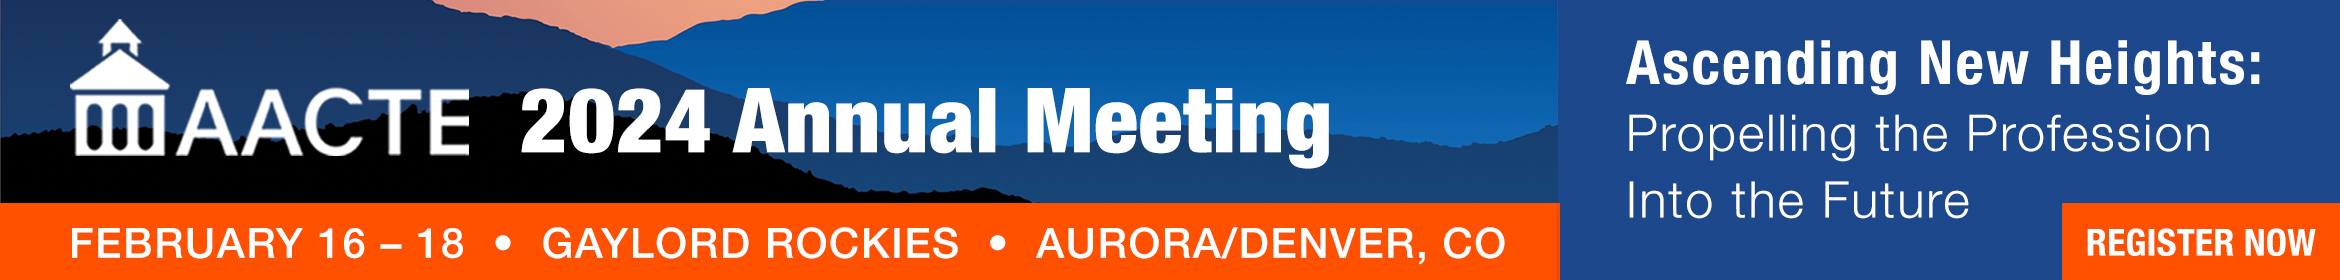 AACTE 2024 Annual Meeting Main banner